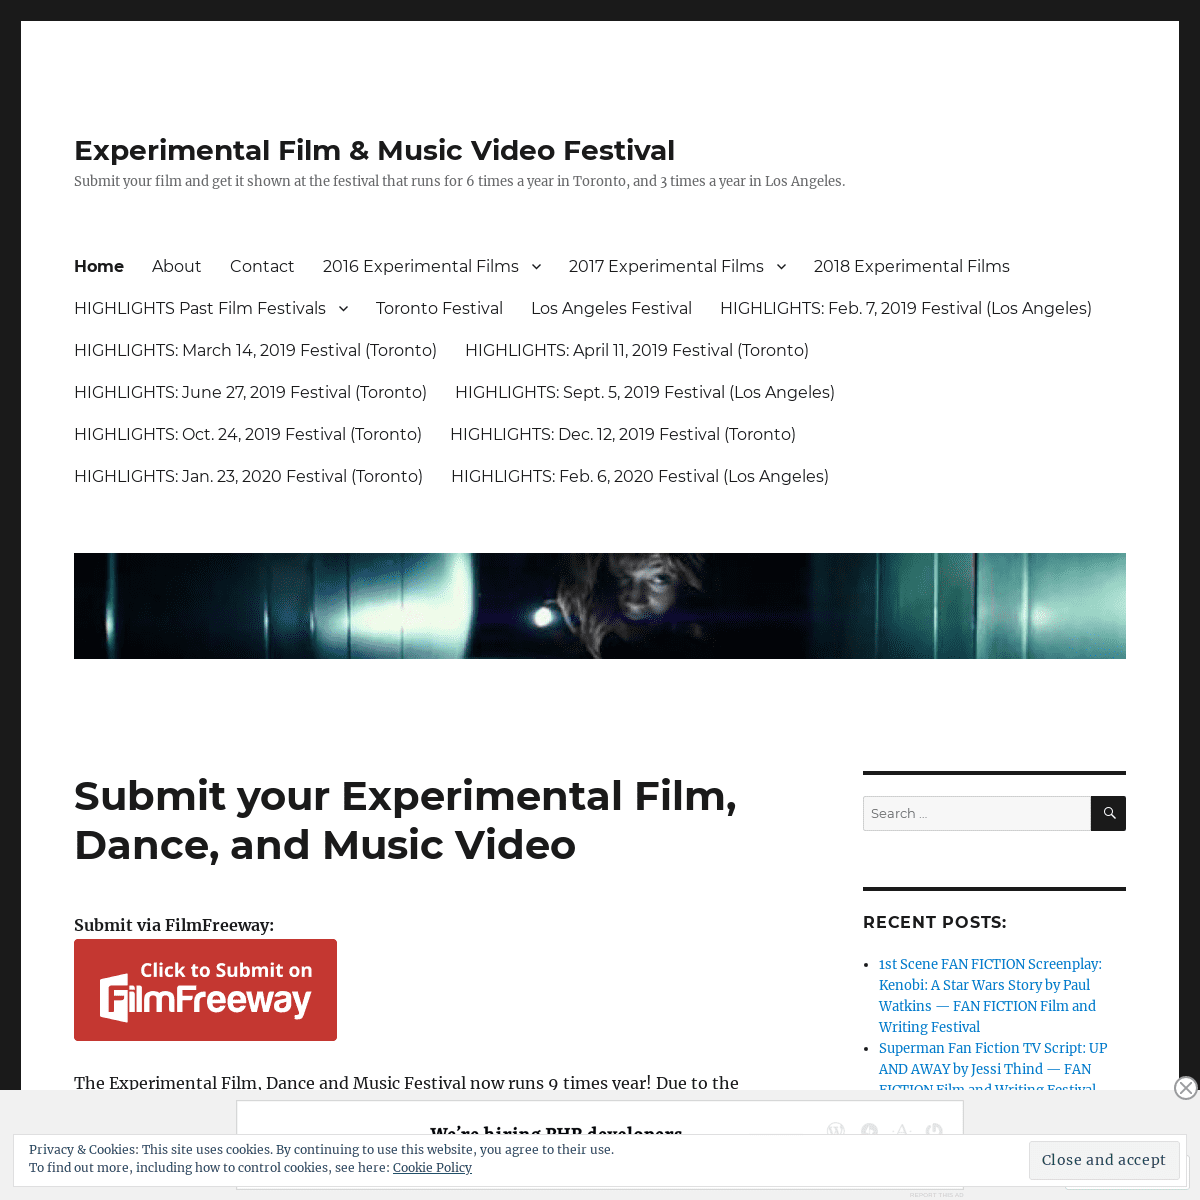 A complete backup of experimentalfilmfestival.com